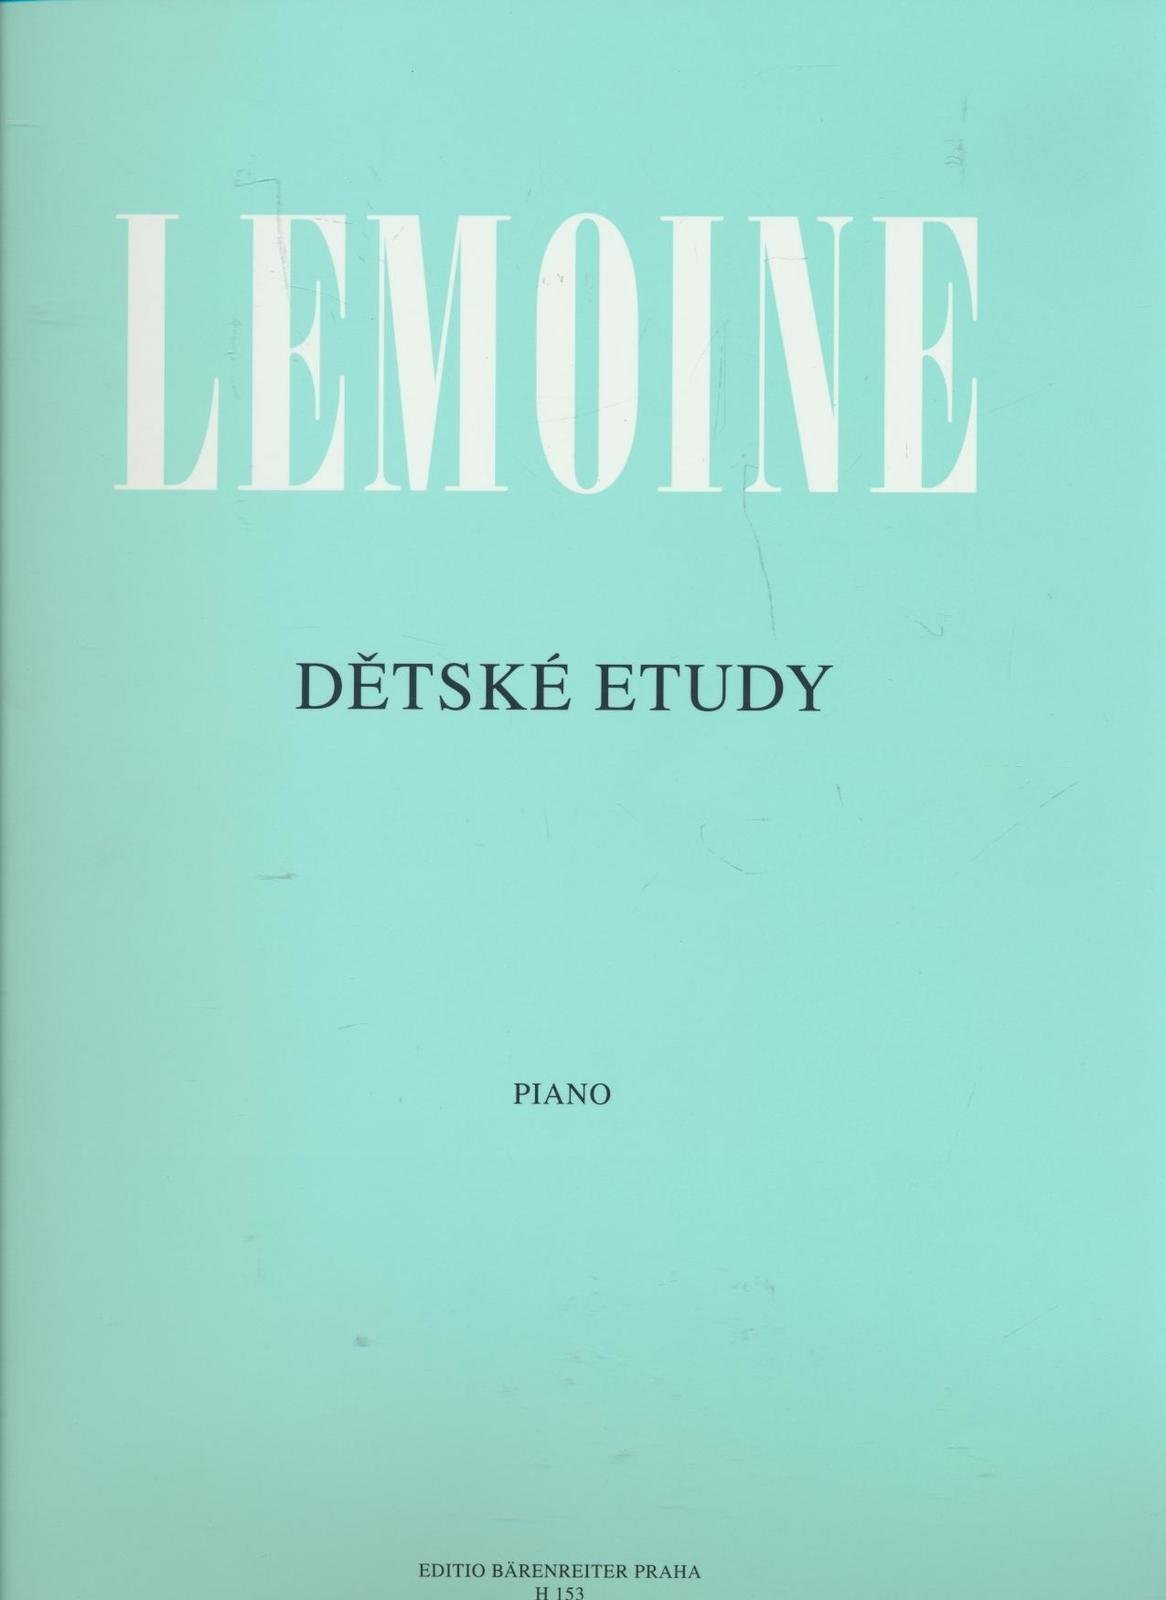 Spartiti Musicali Piano Henri Lemoine Detské etudy op. 37